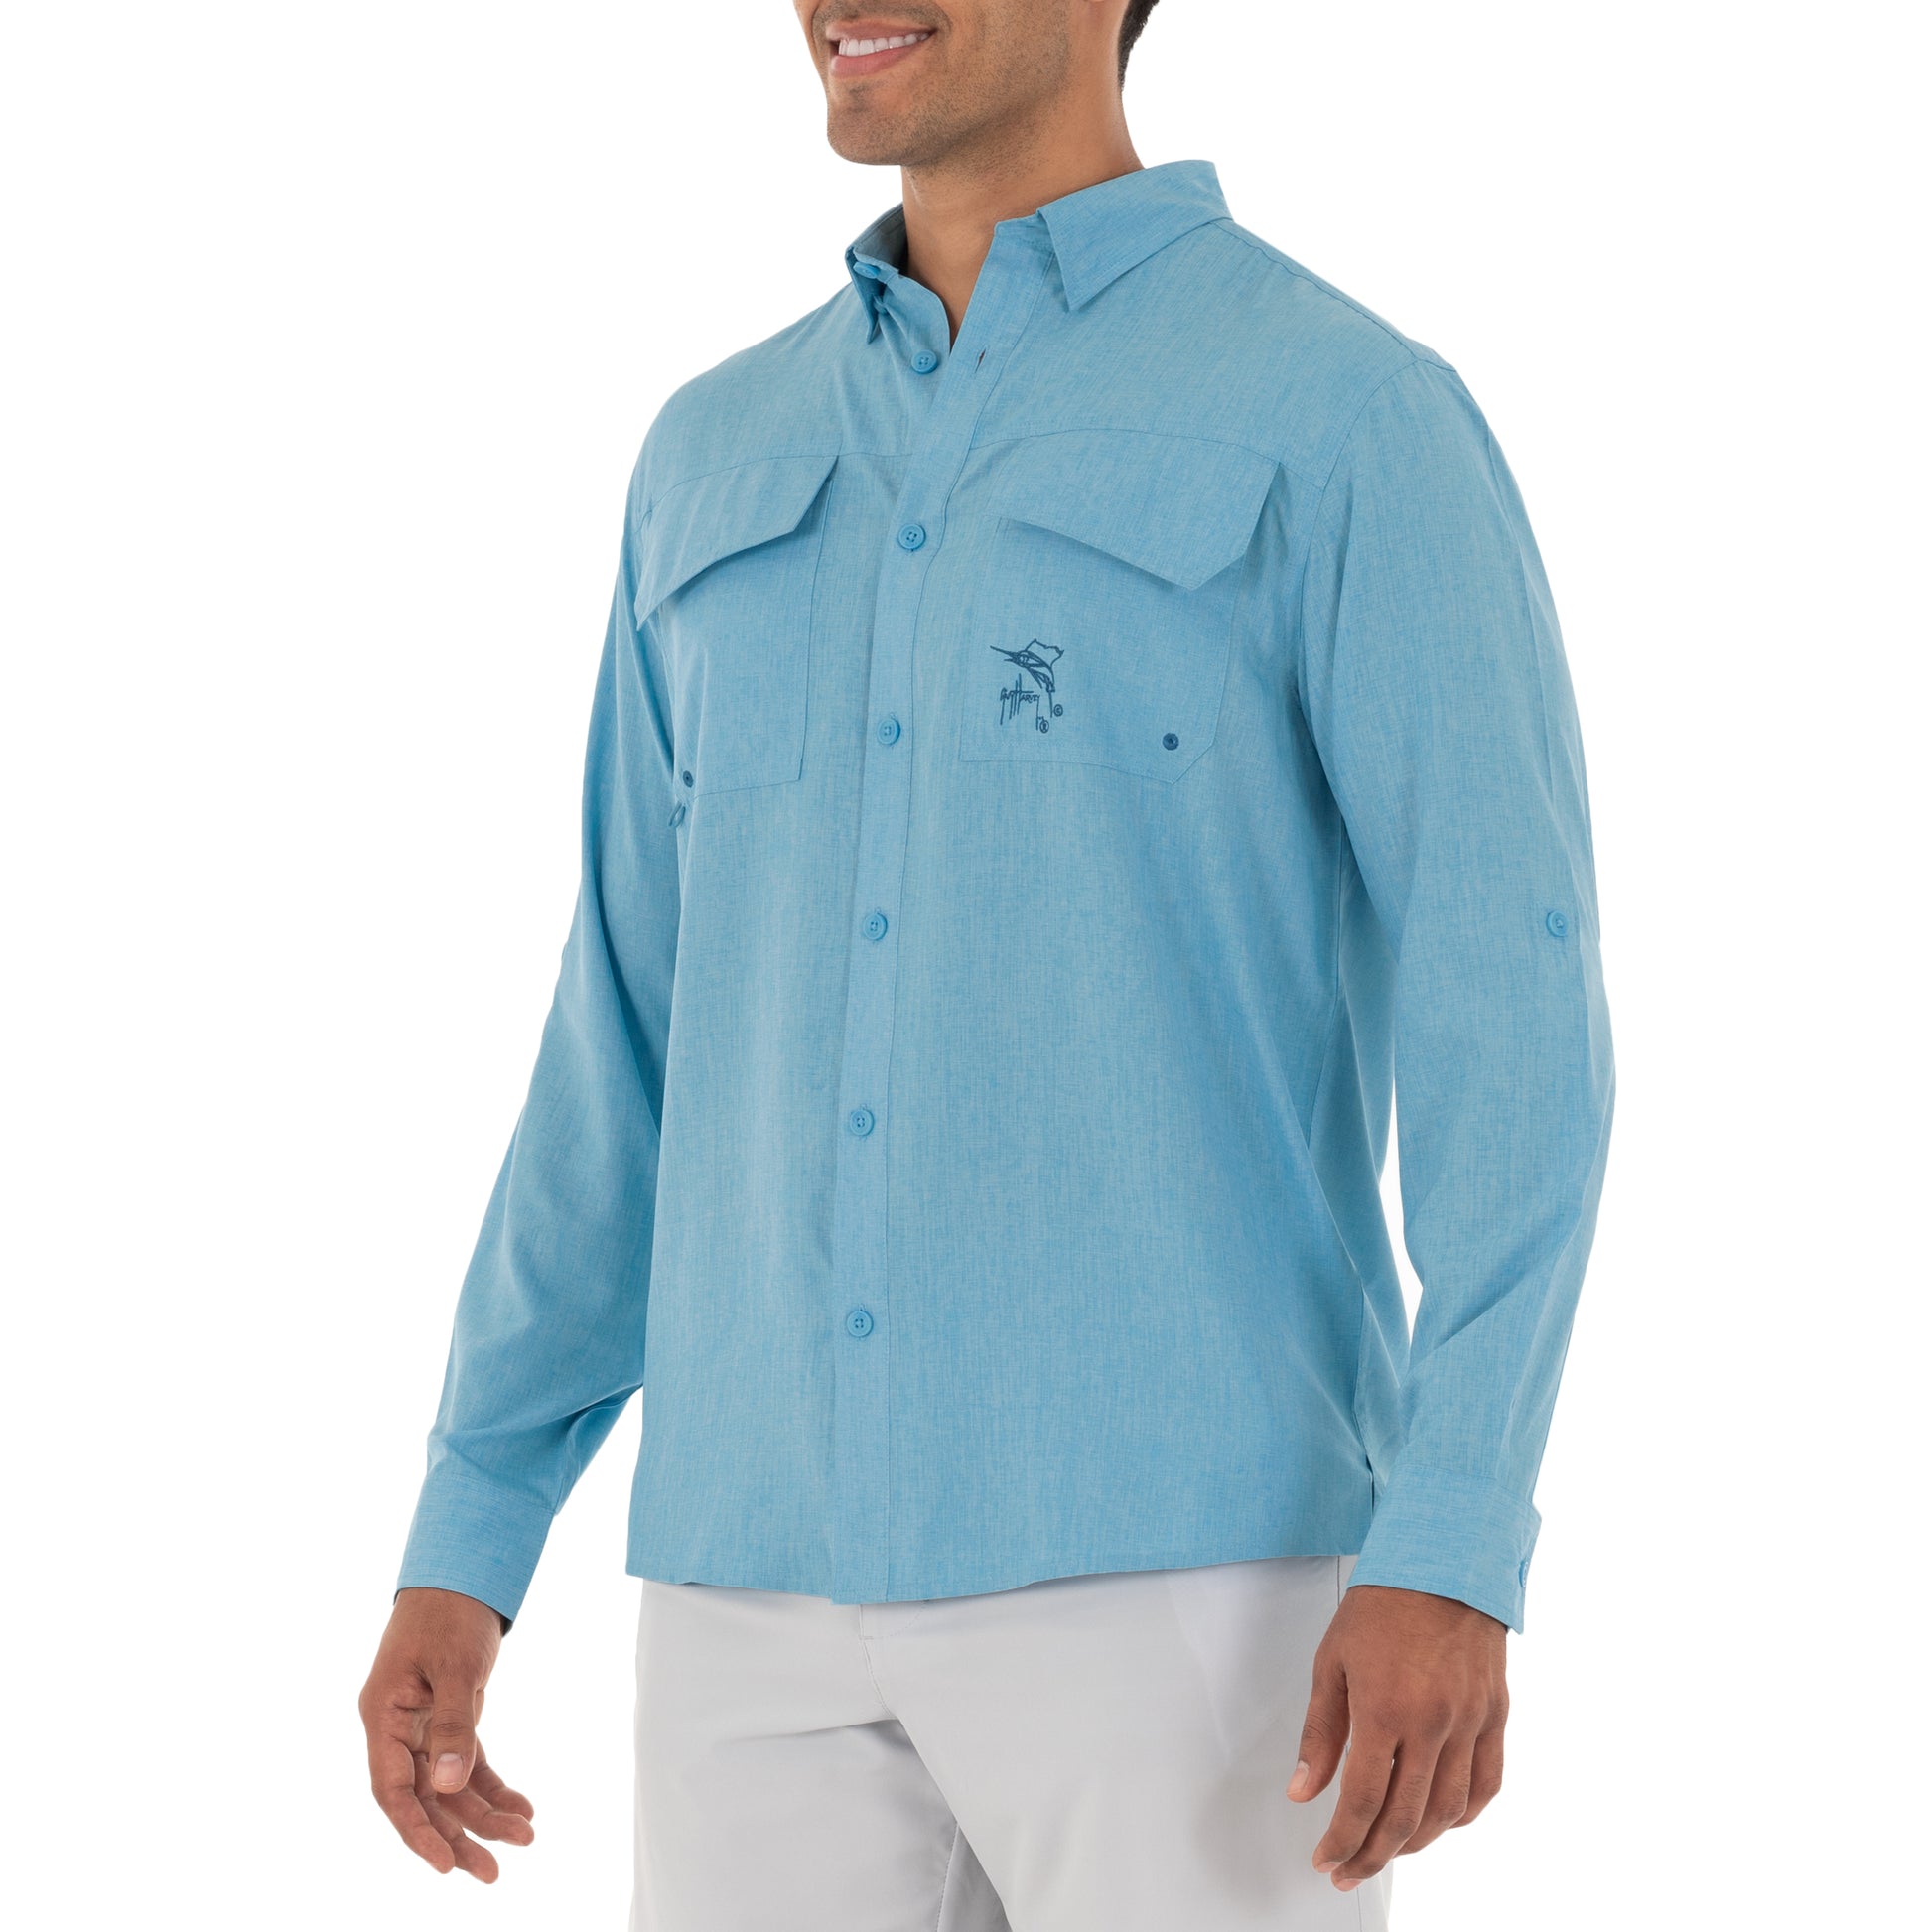 Guy Harvey | Men's Long Sleeve Heather Textured Cationic Blue Fishing Shirt, Large